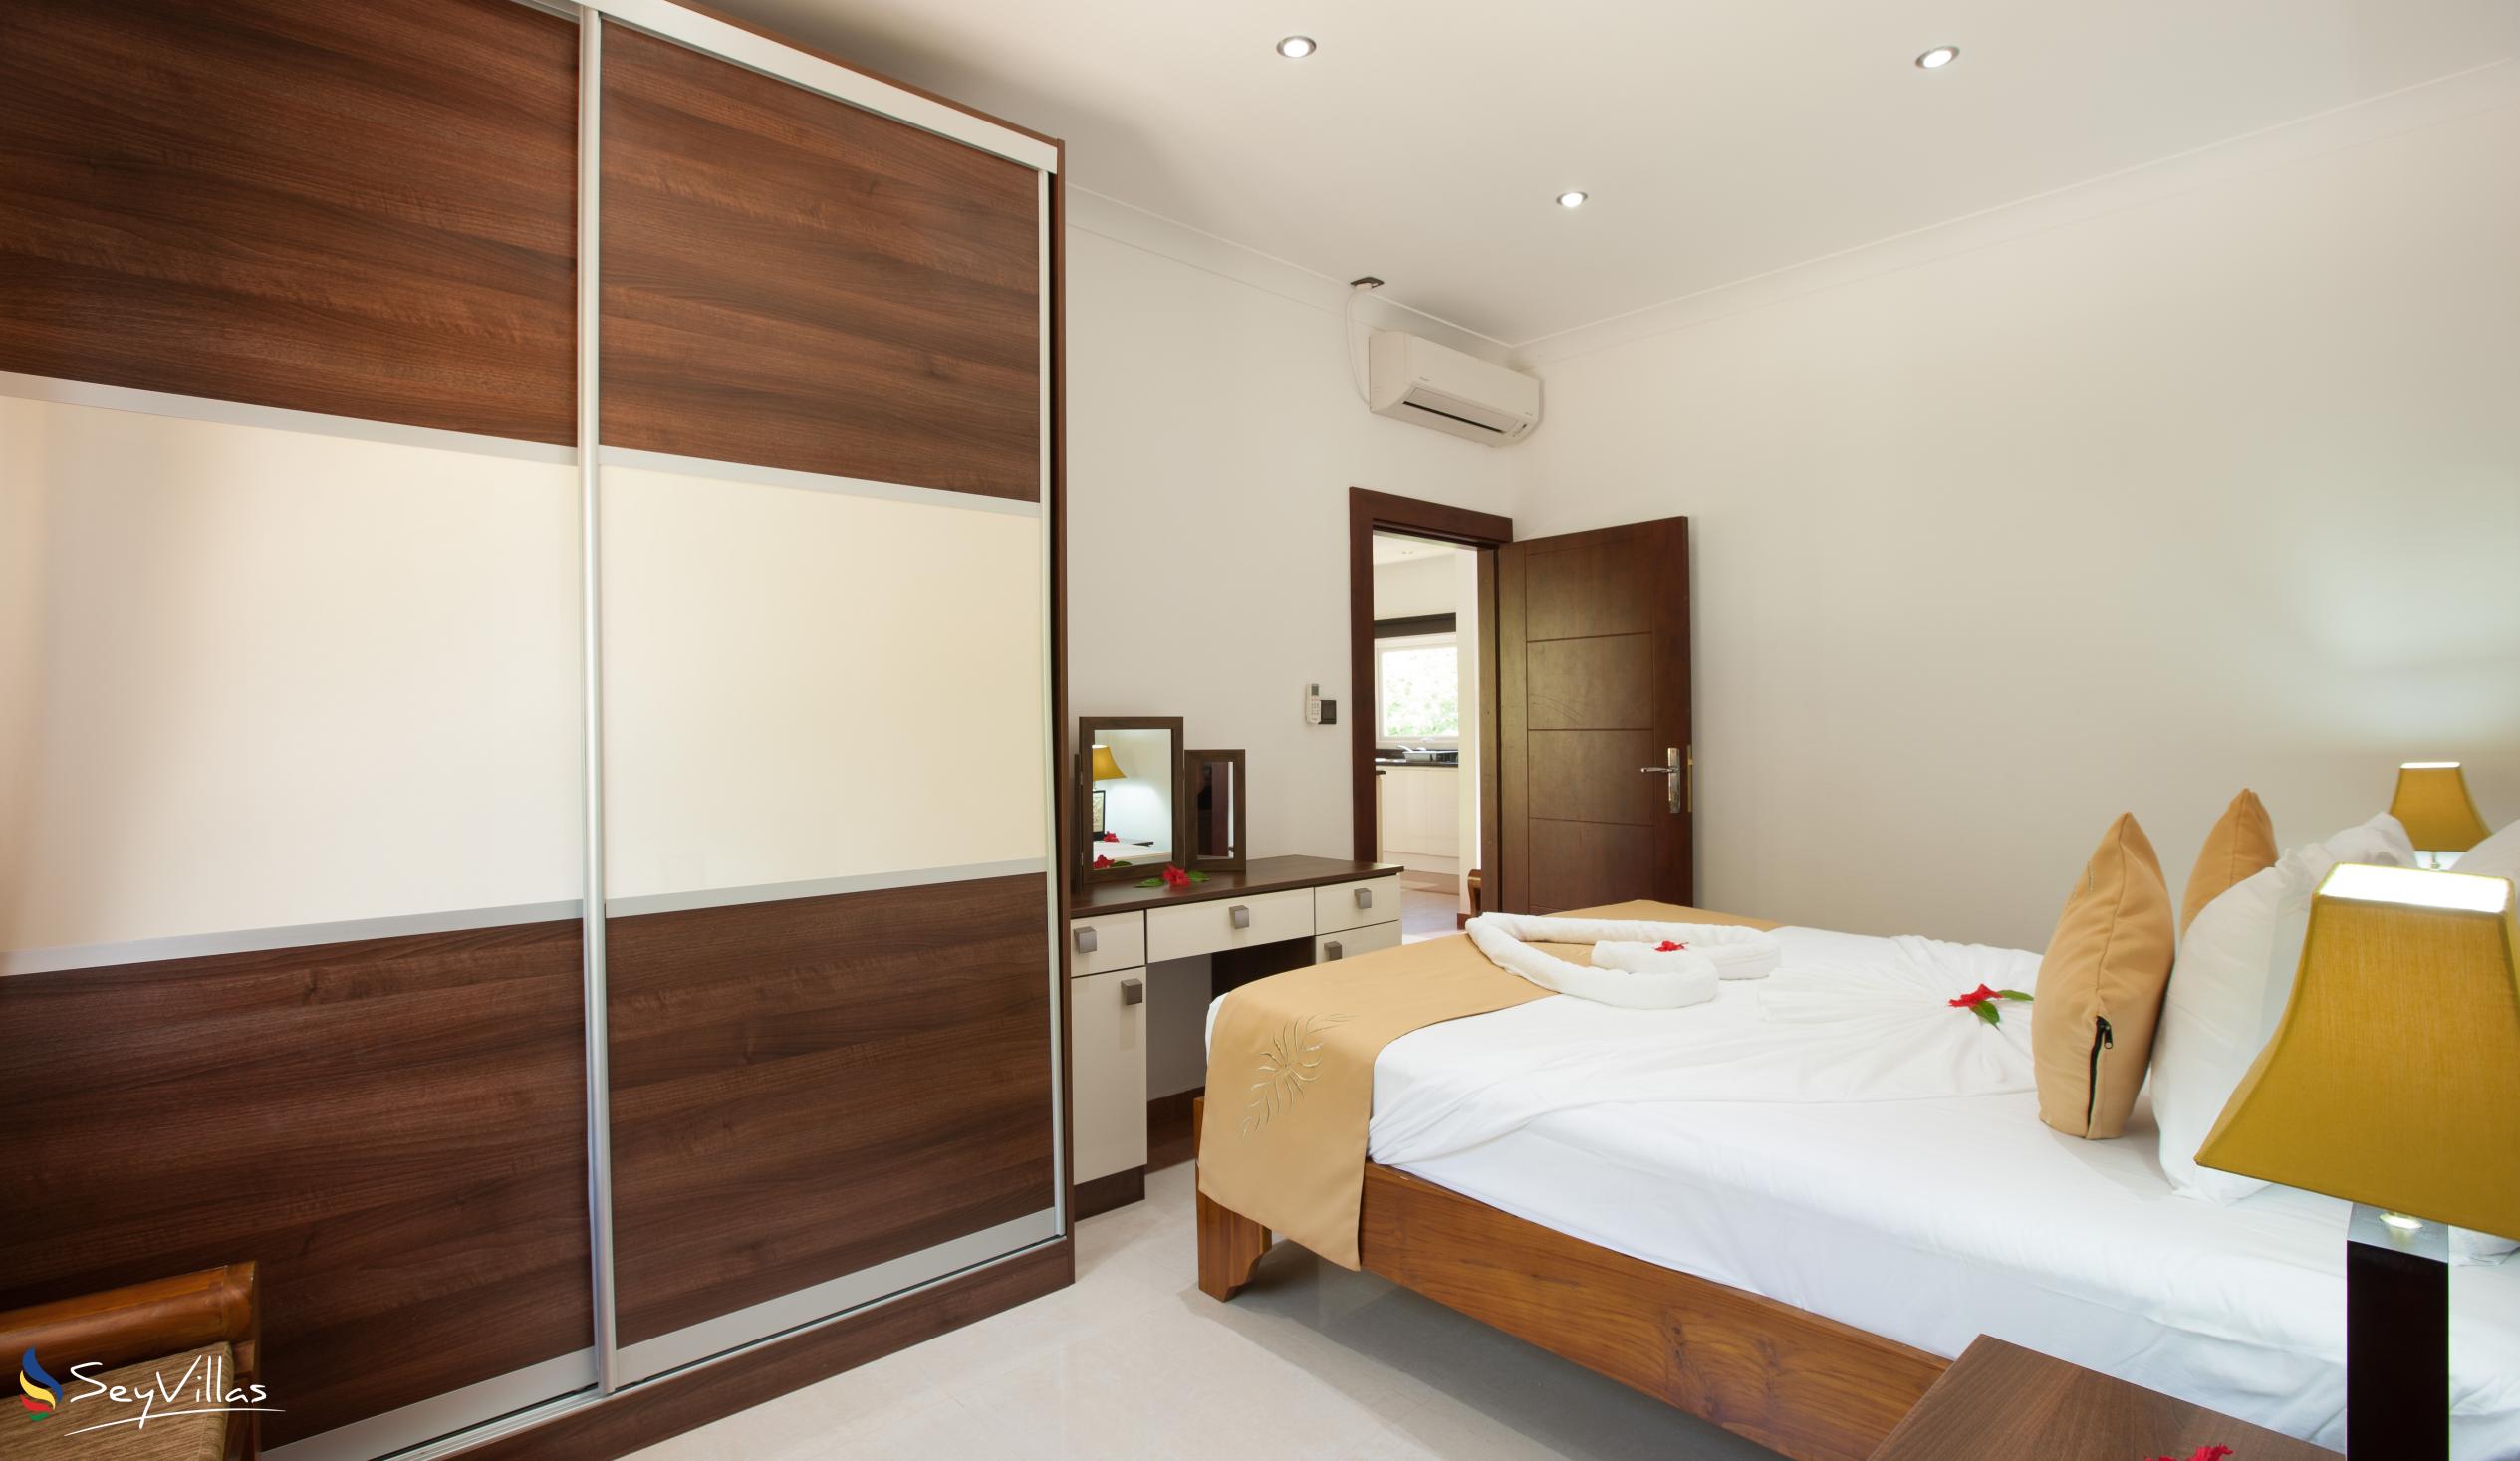 Foto 74: YASAD Luxury Beach Residence - Appartement 3 chambres - Praslin (Seychelles)